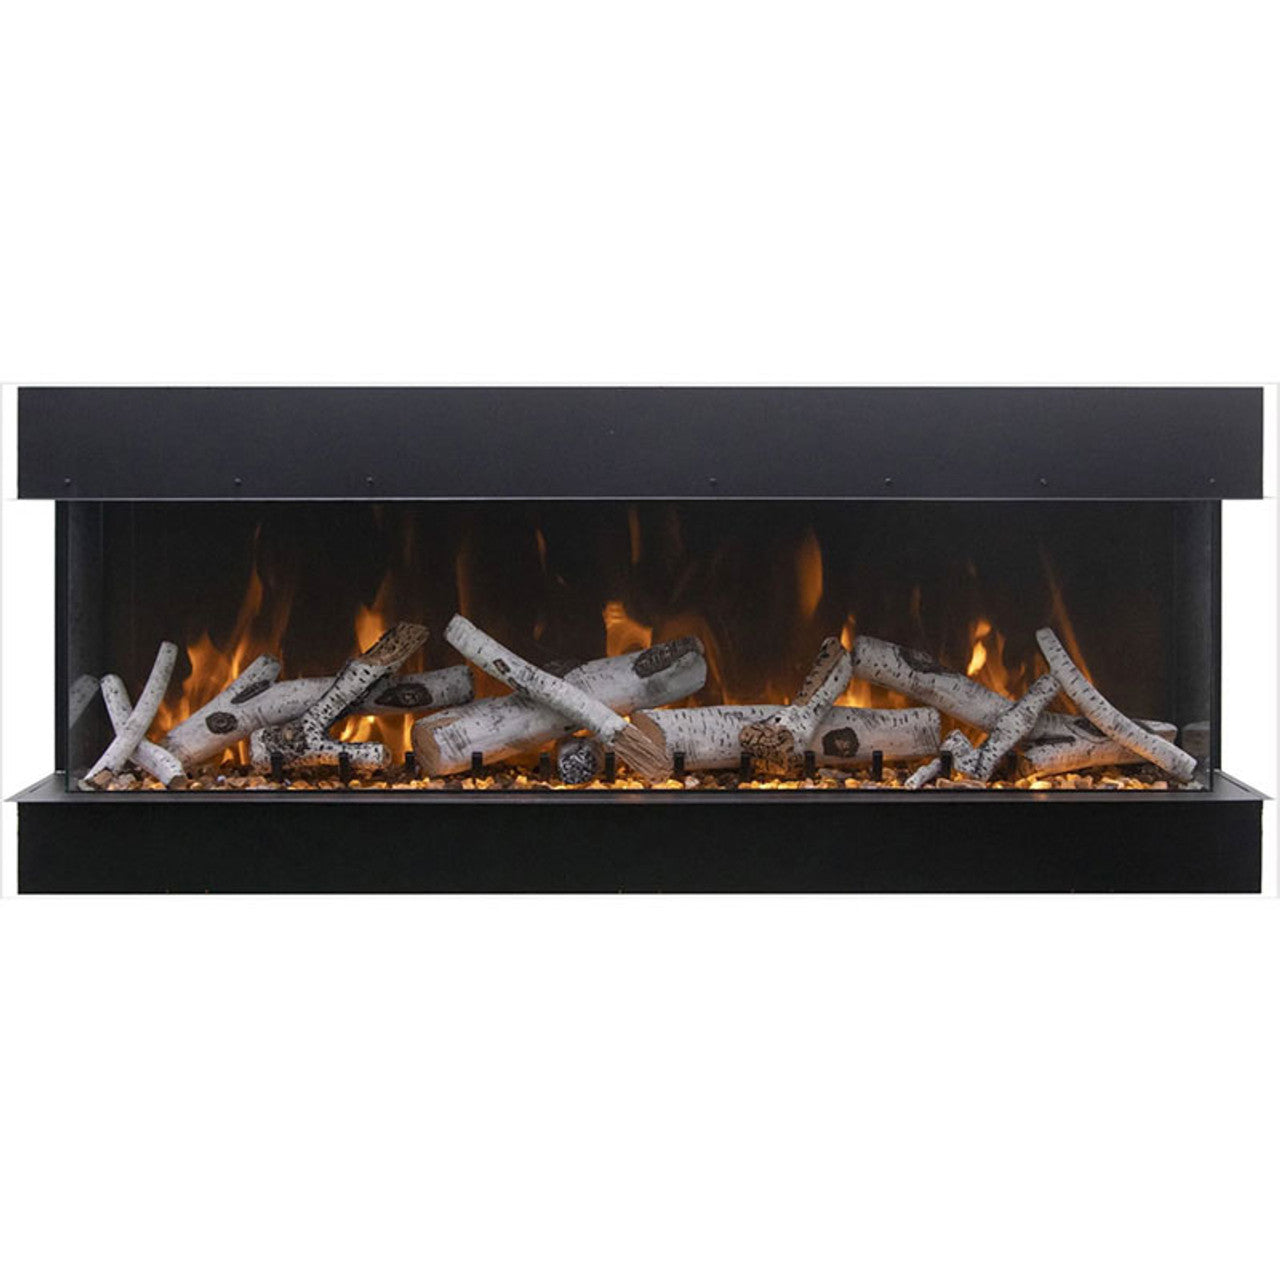 Amantii Tru View XL Deep 60" Smart Electric Fireplace - 60-TRU-VIEW-XL - Chimney Cricket